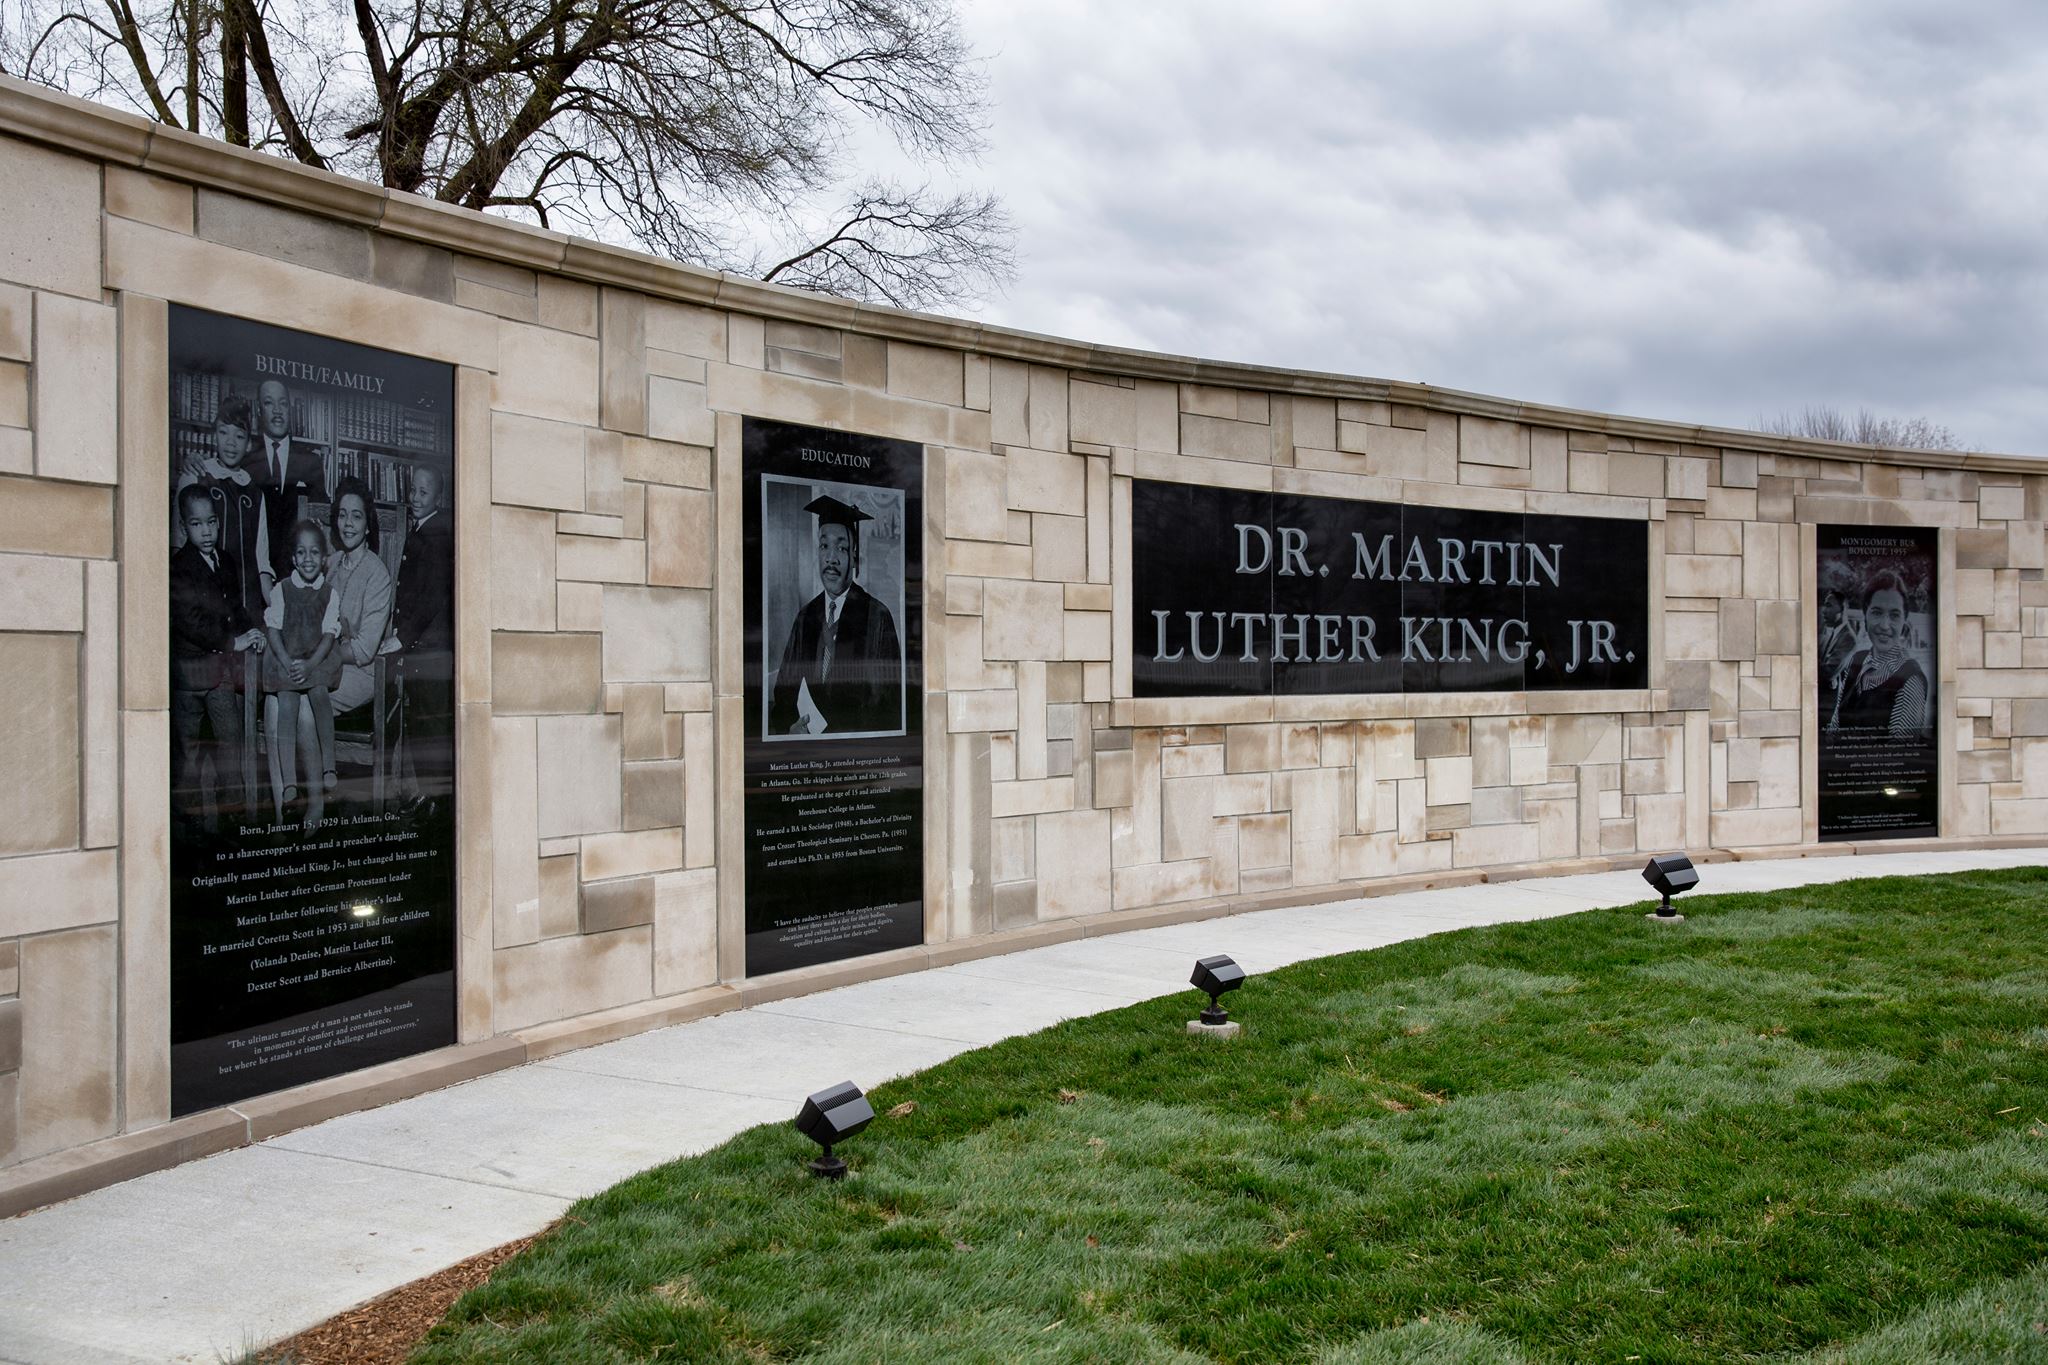 Rev. Dr. Martin Luther King Jr. Memorial